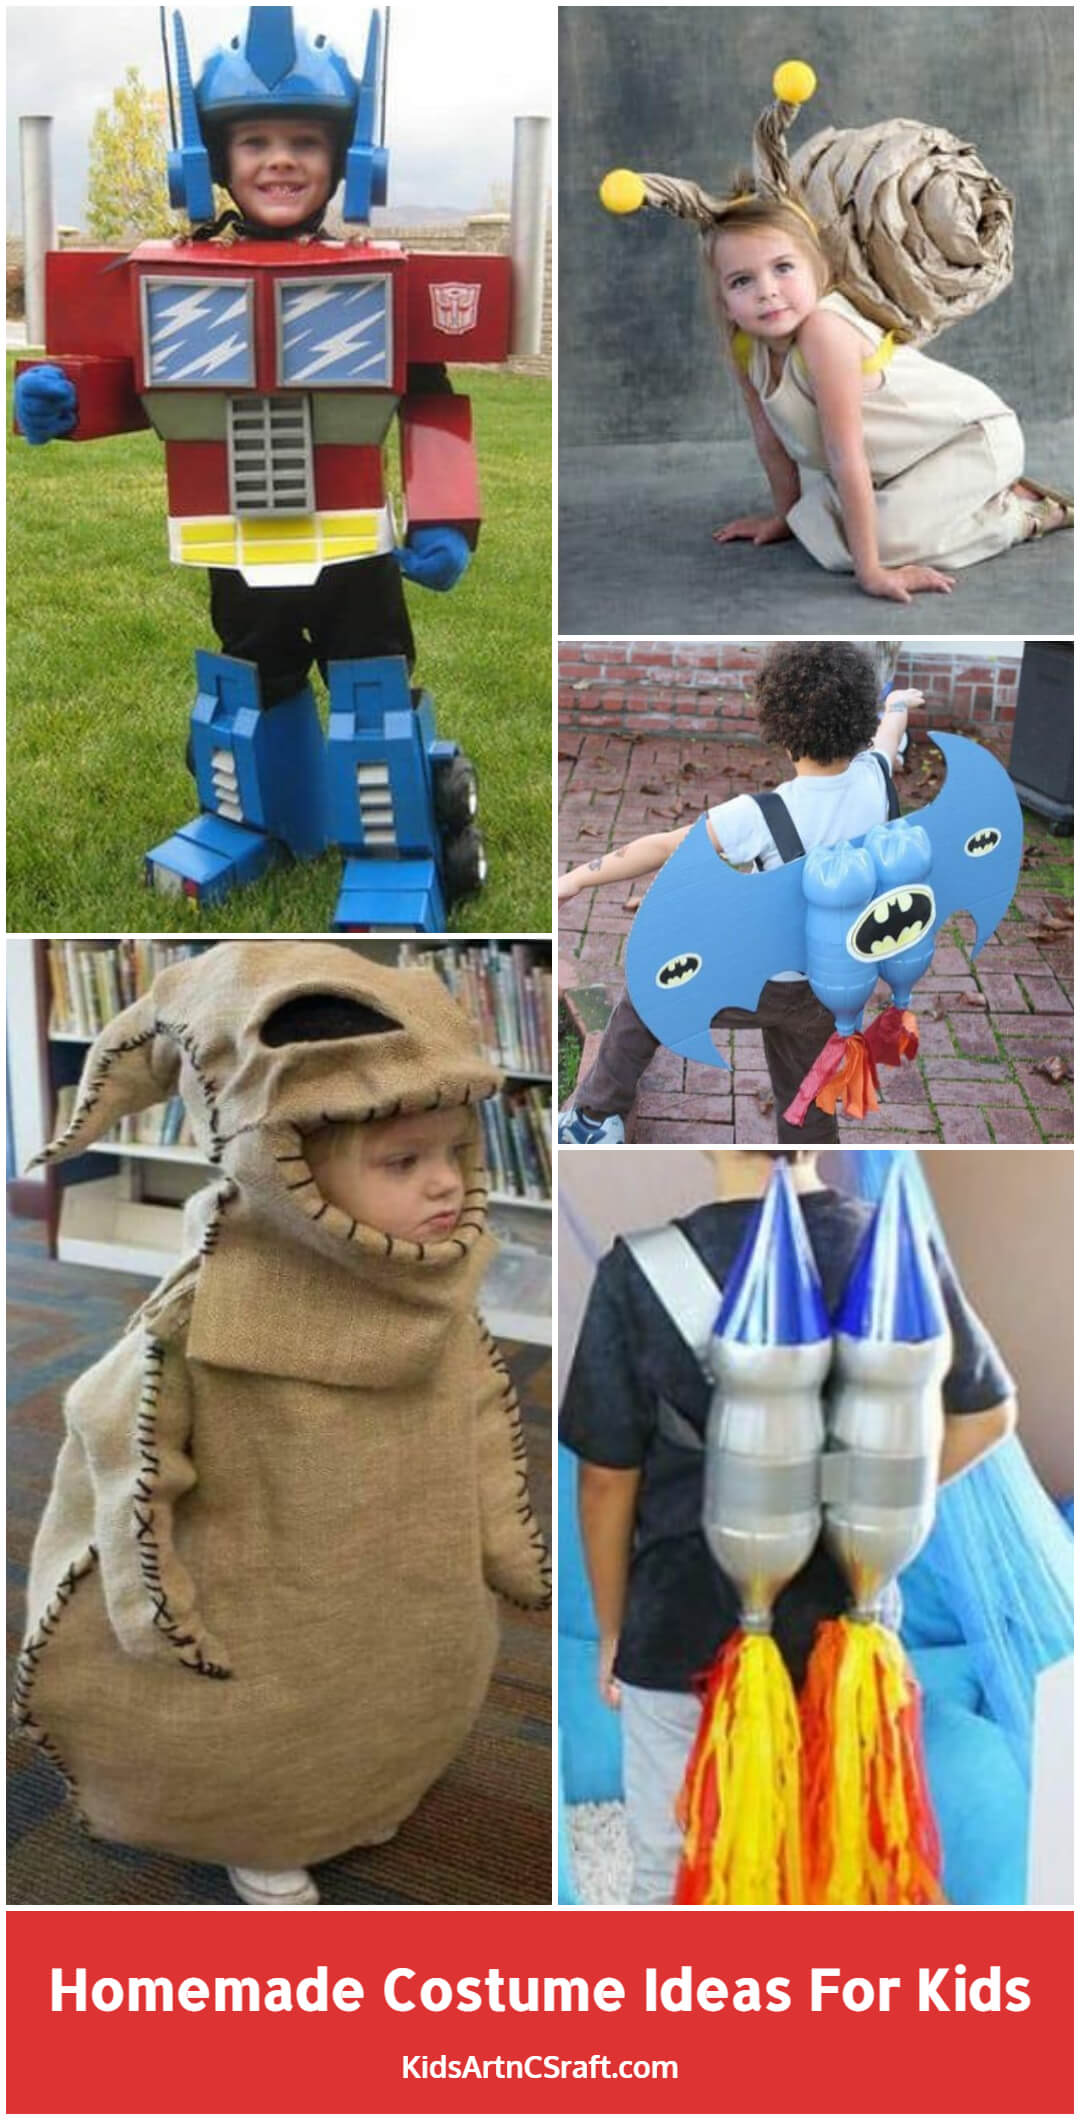 Homemade Costume Ideas for Kids - Kids Art & Craft